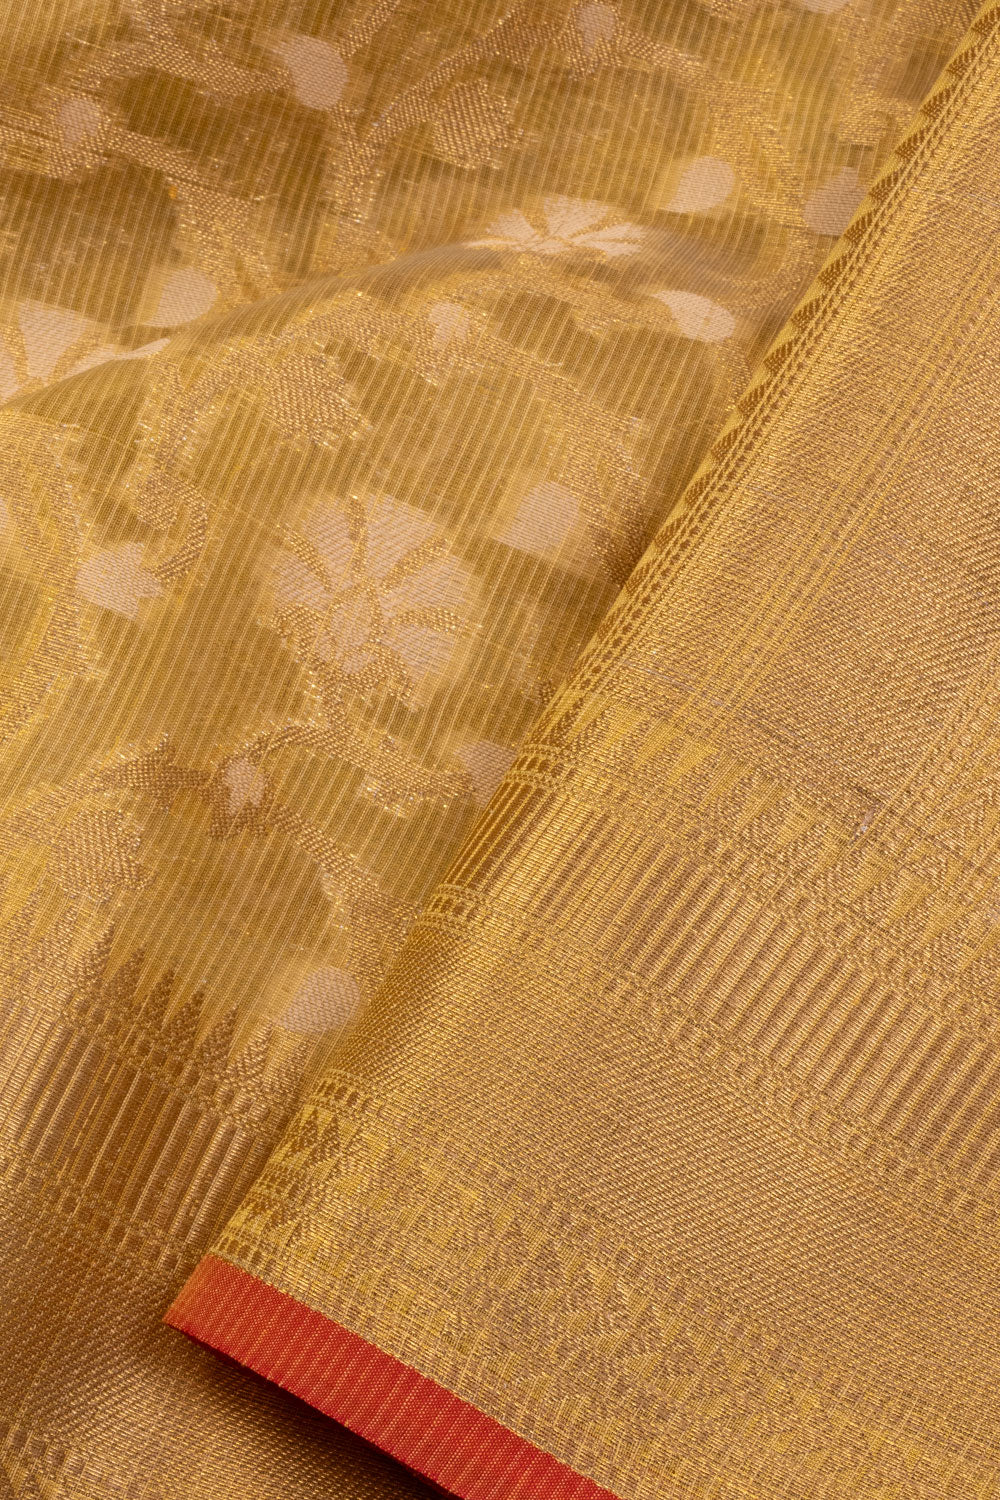 Apple Greeen Handloom Banarasi Silk Cotton Saree 10070494 - Avishya